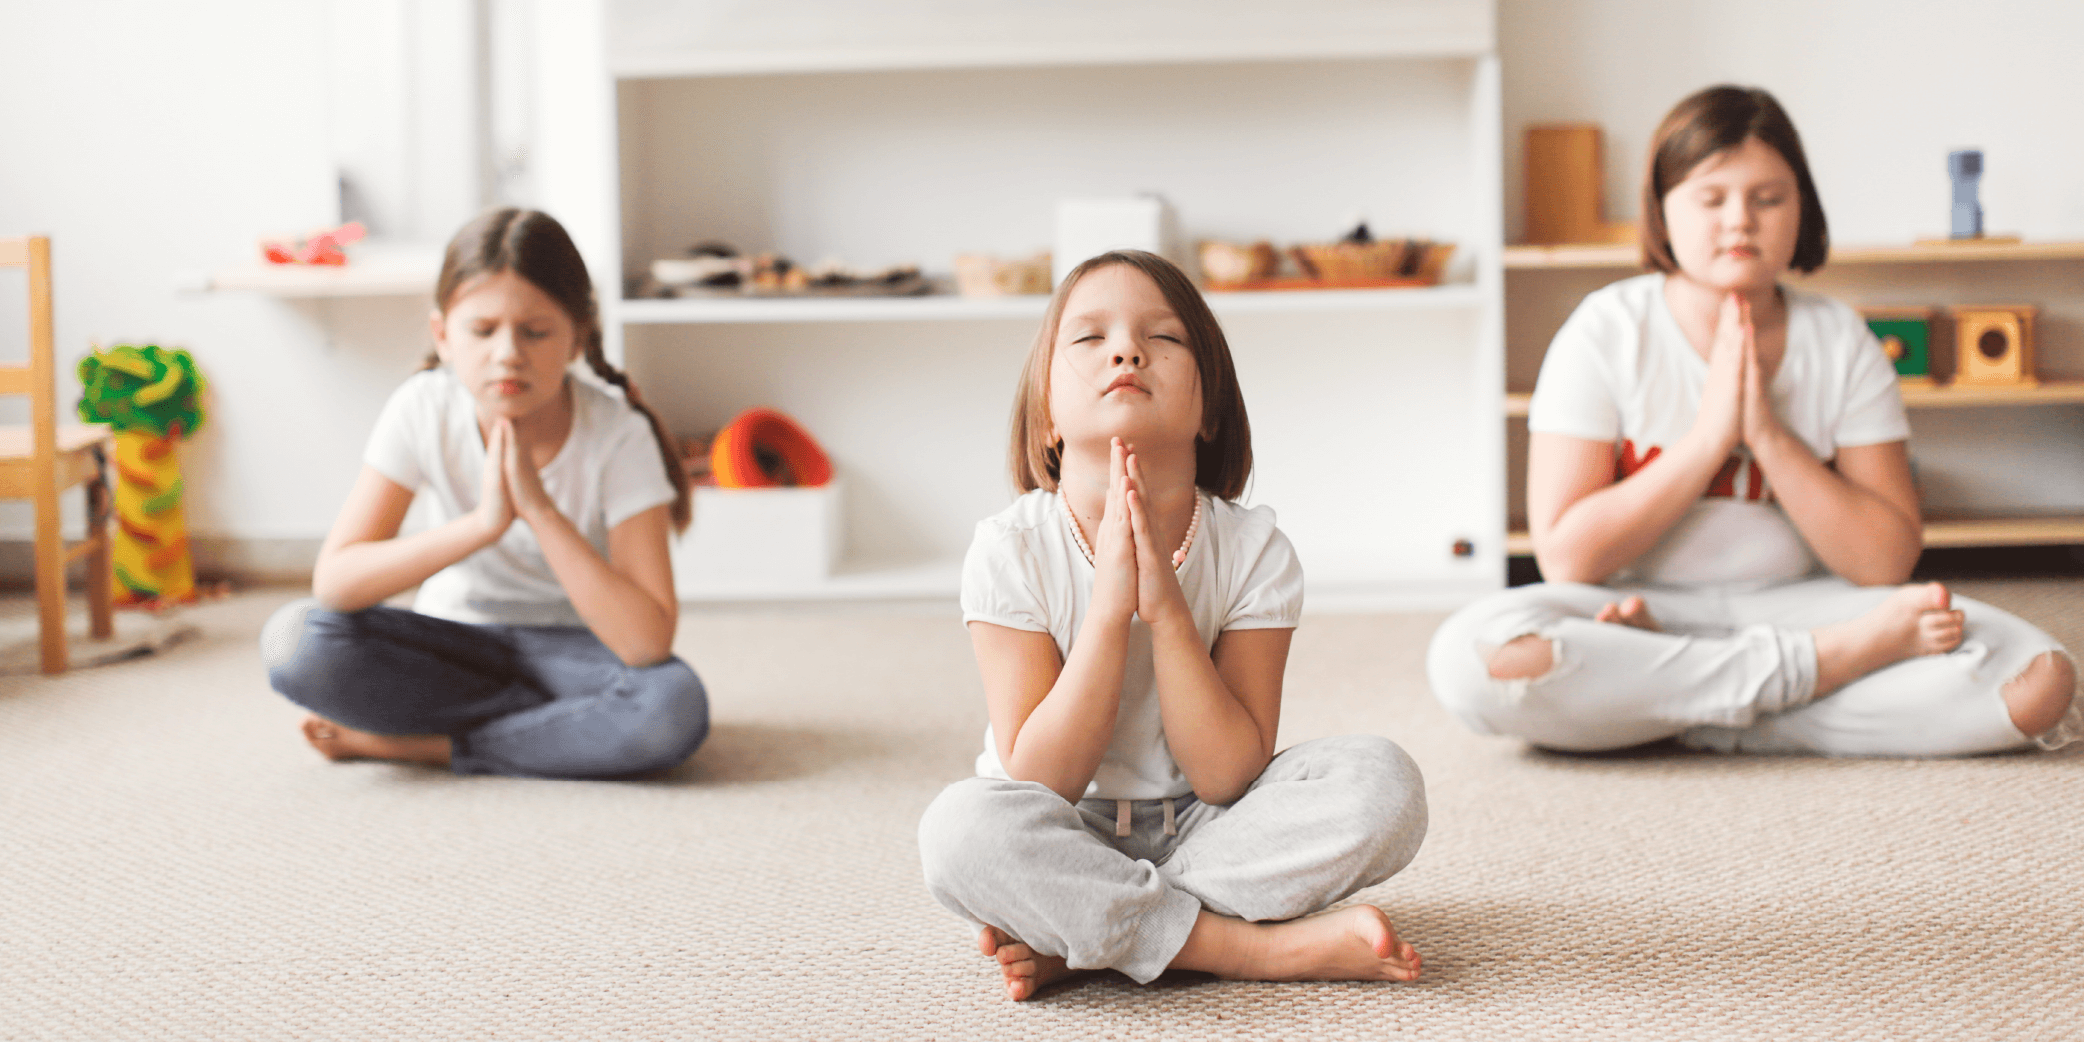 3 girls in a yoga meditation pose